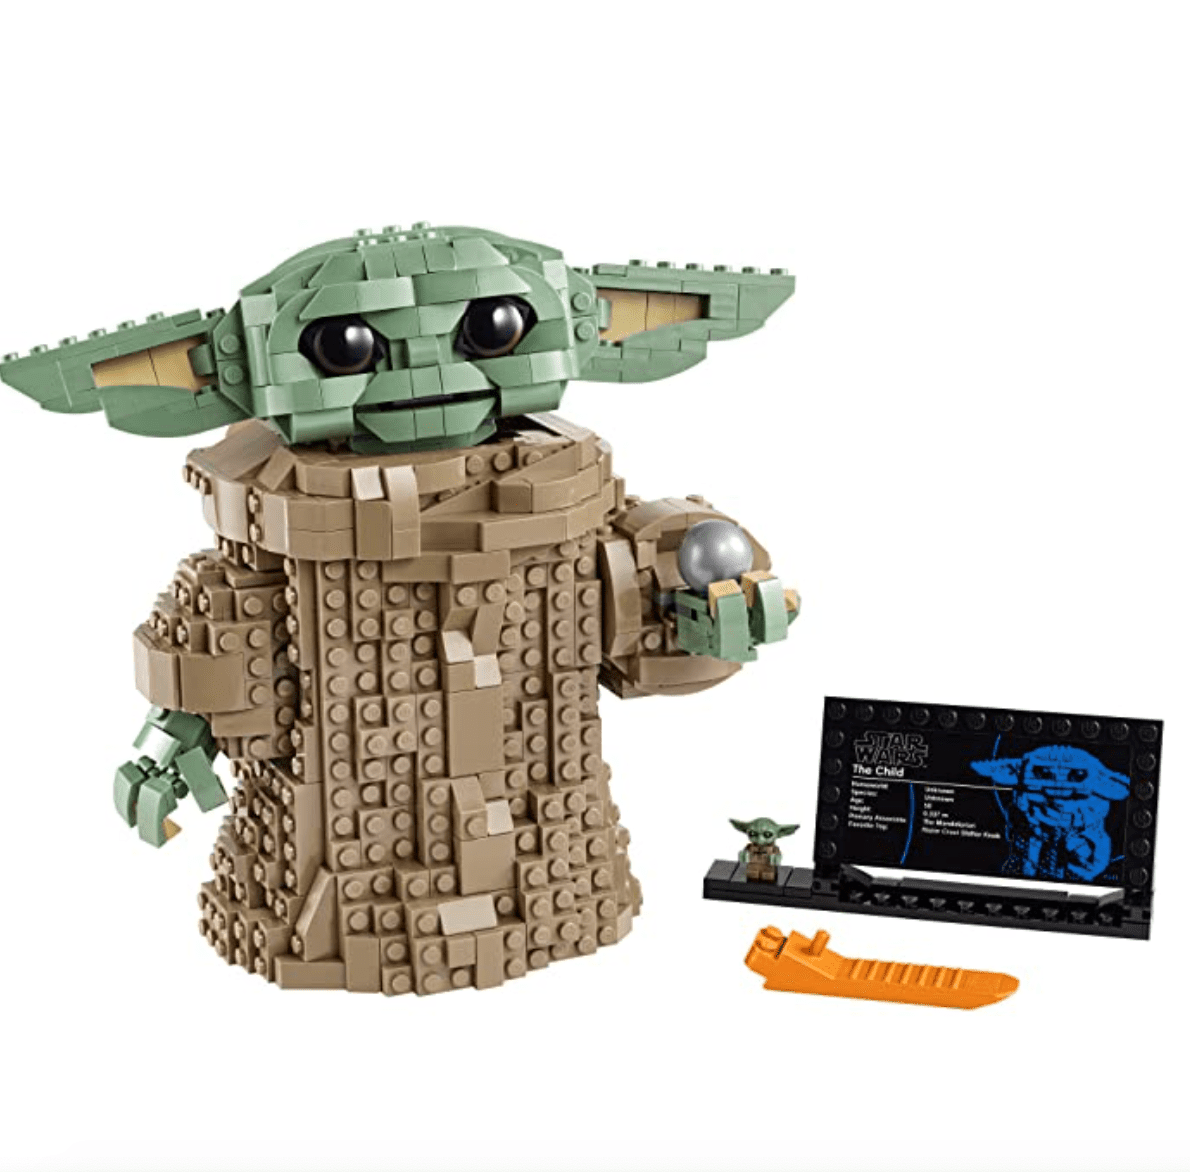 LEGO Star Wars: The Mandalorian The Child Building Set